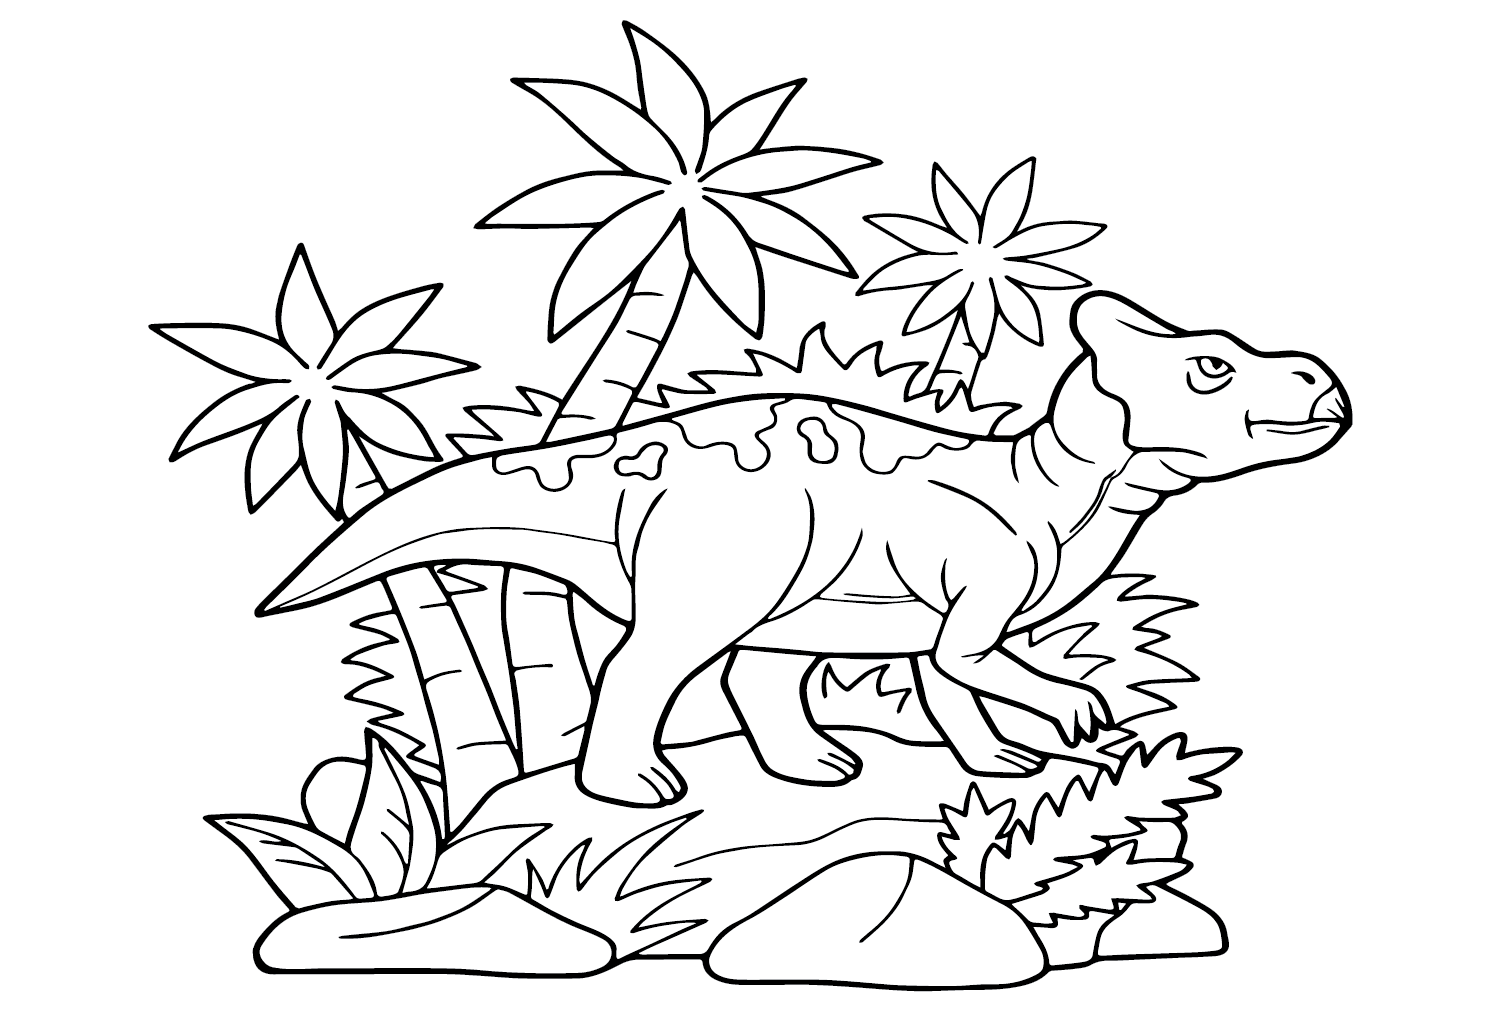 Protoceratops Illustration Malseite von Protoceratops